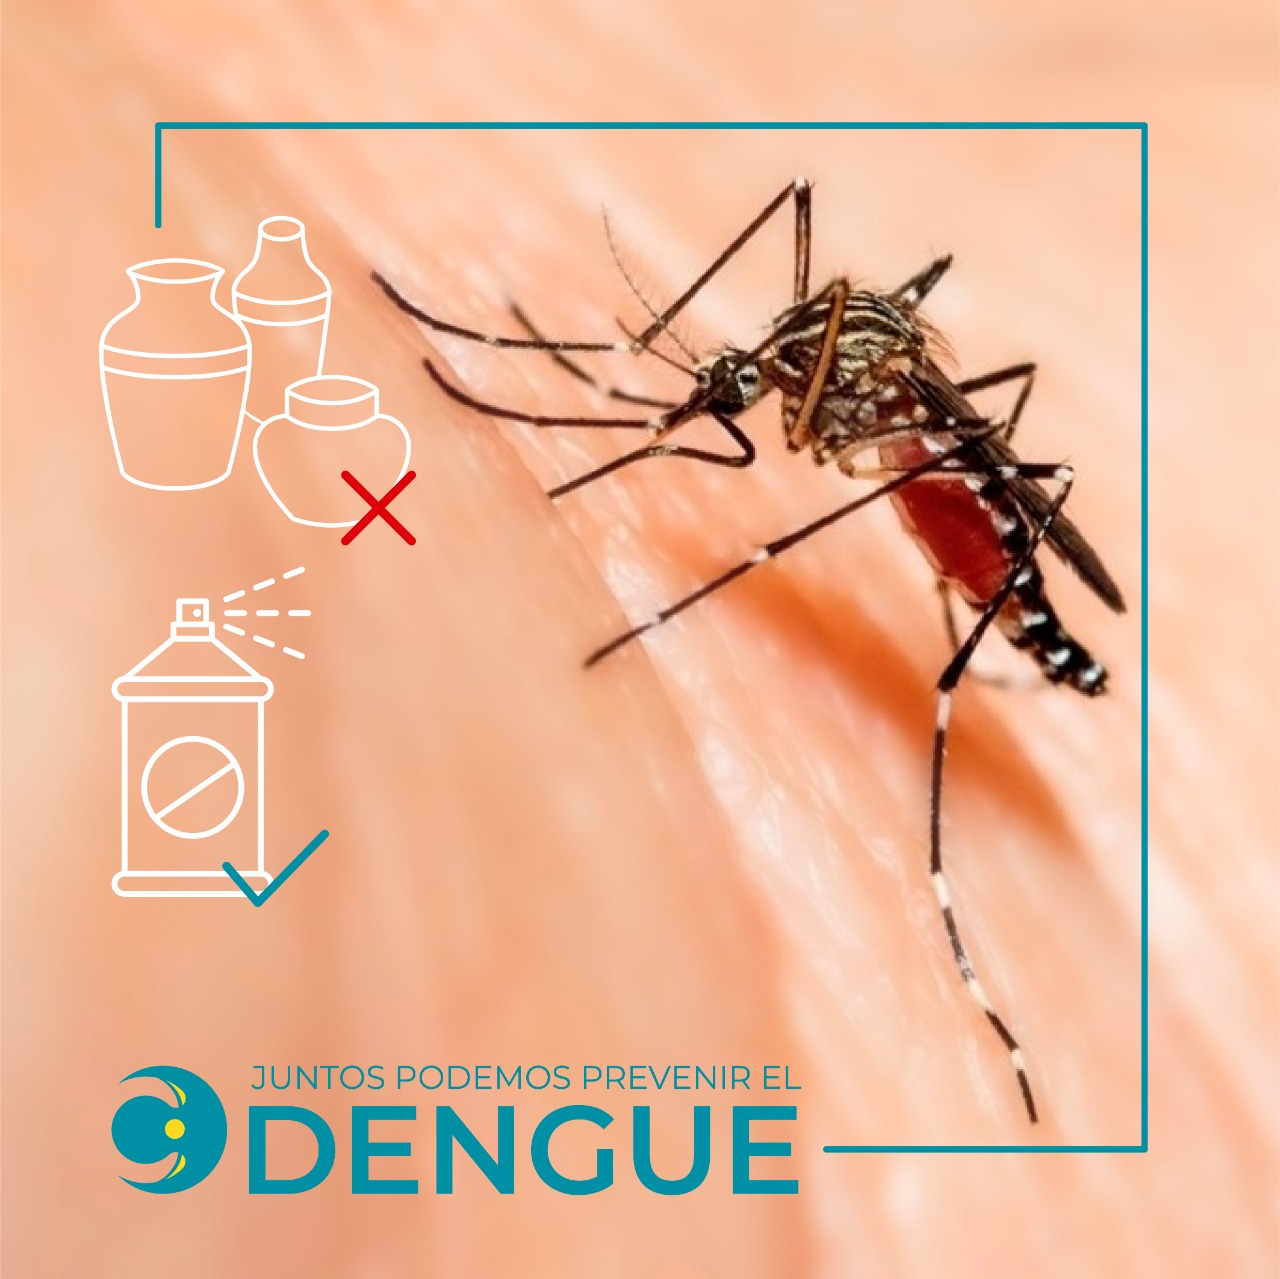 cytec-prevencion-dengue